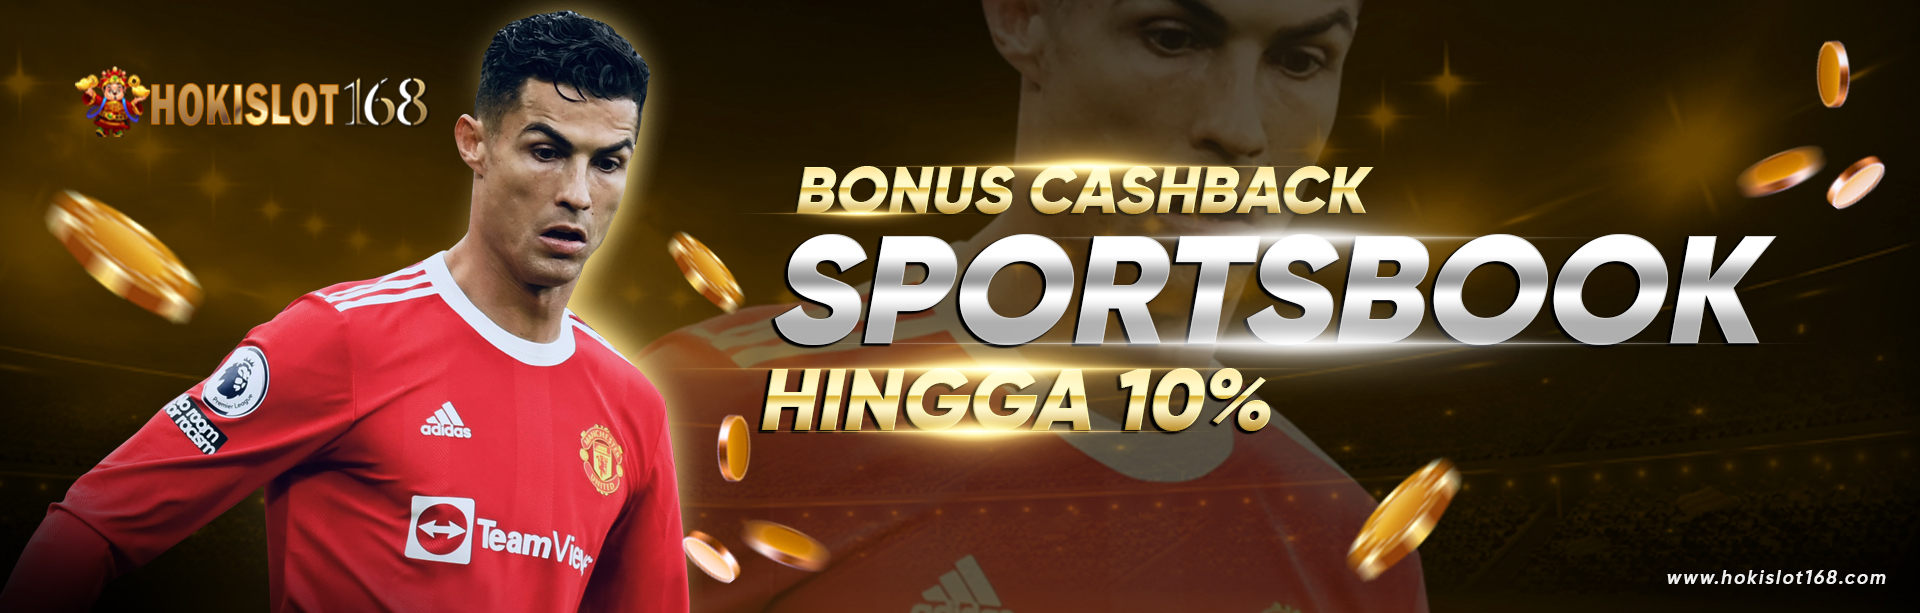 Bonus cashback sportsbook up to 10%